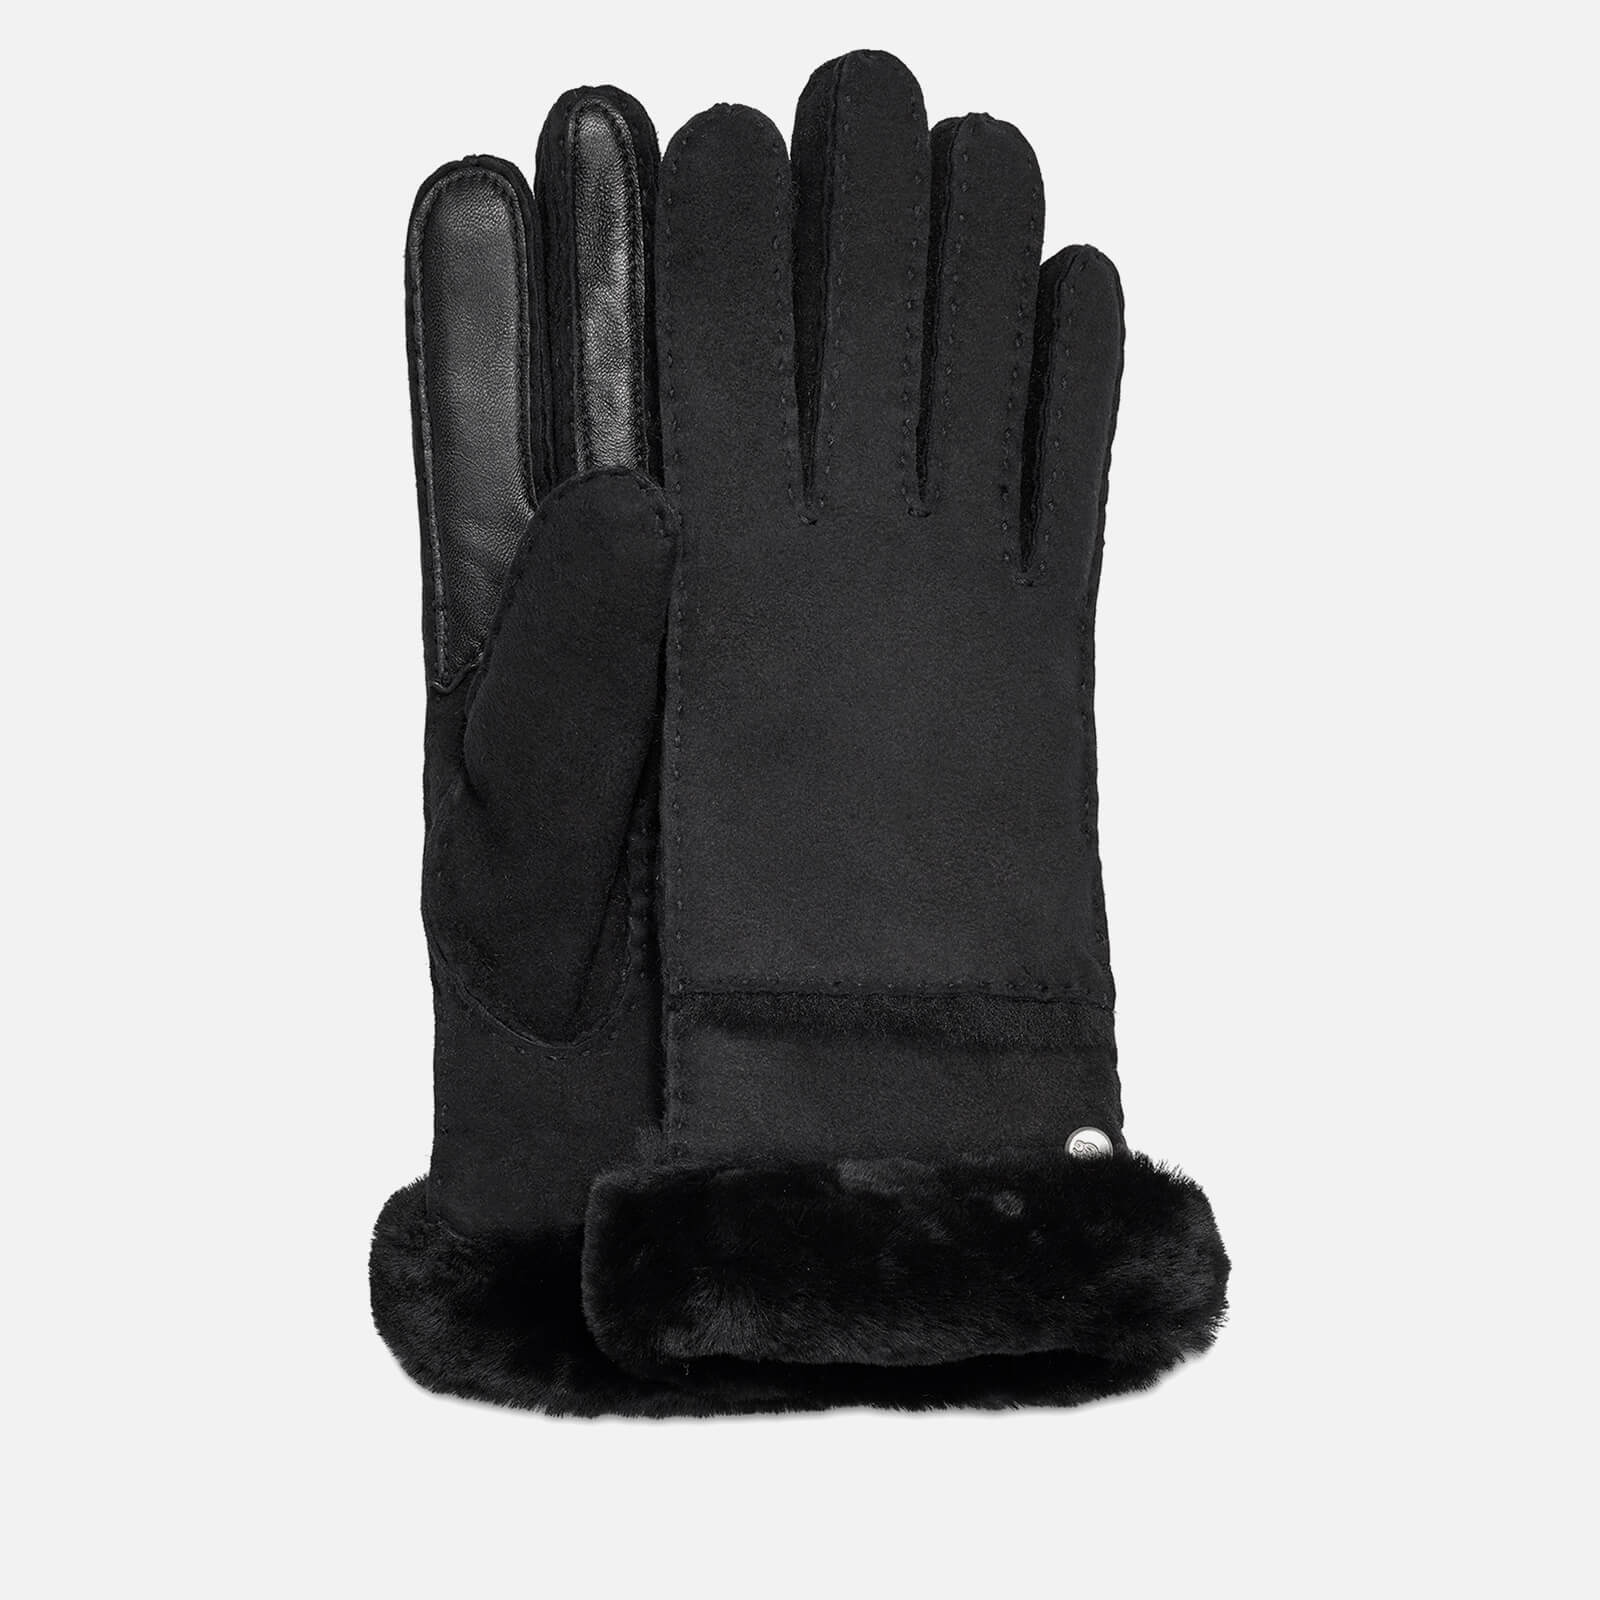 UGG Women's Seamed Tech Glove - Black - S